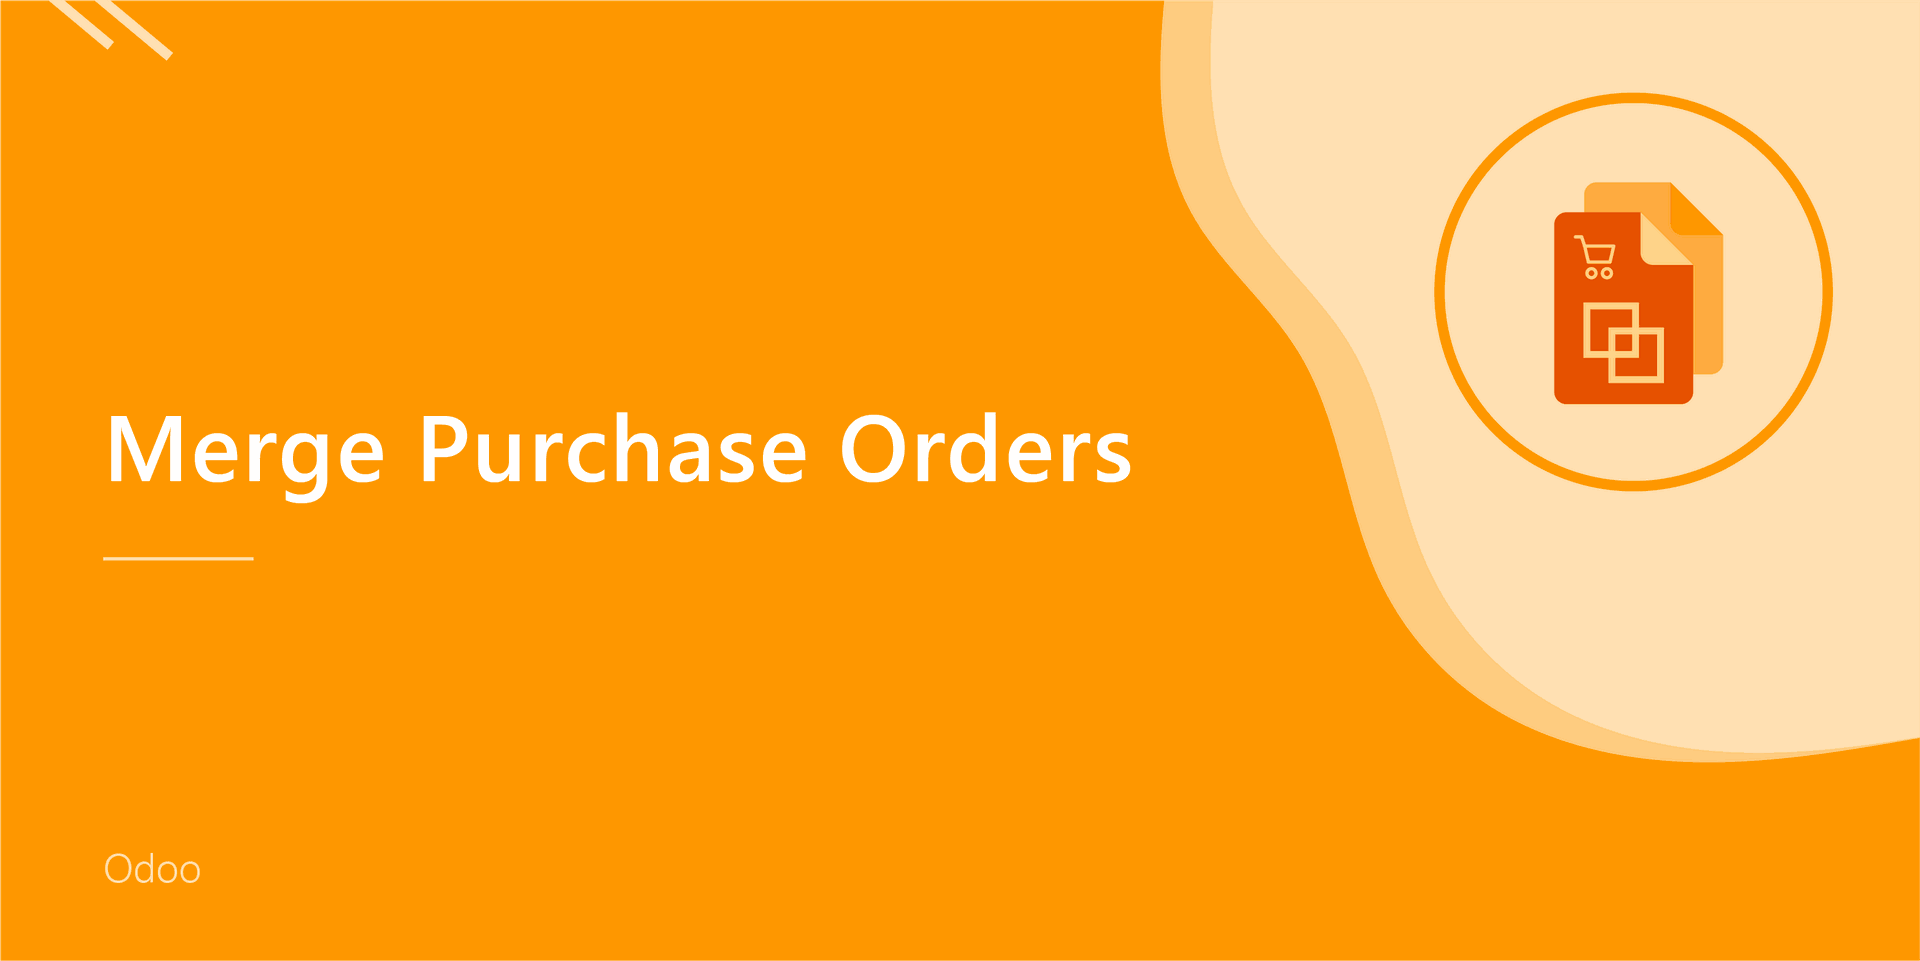 Merge Purchase Orders
